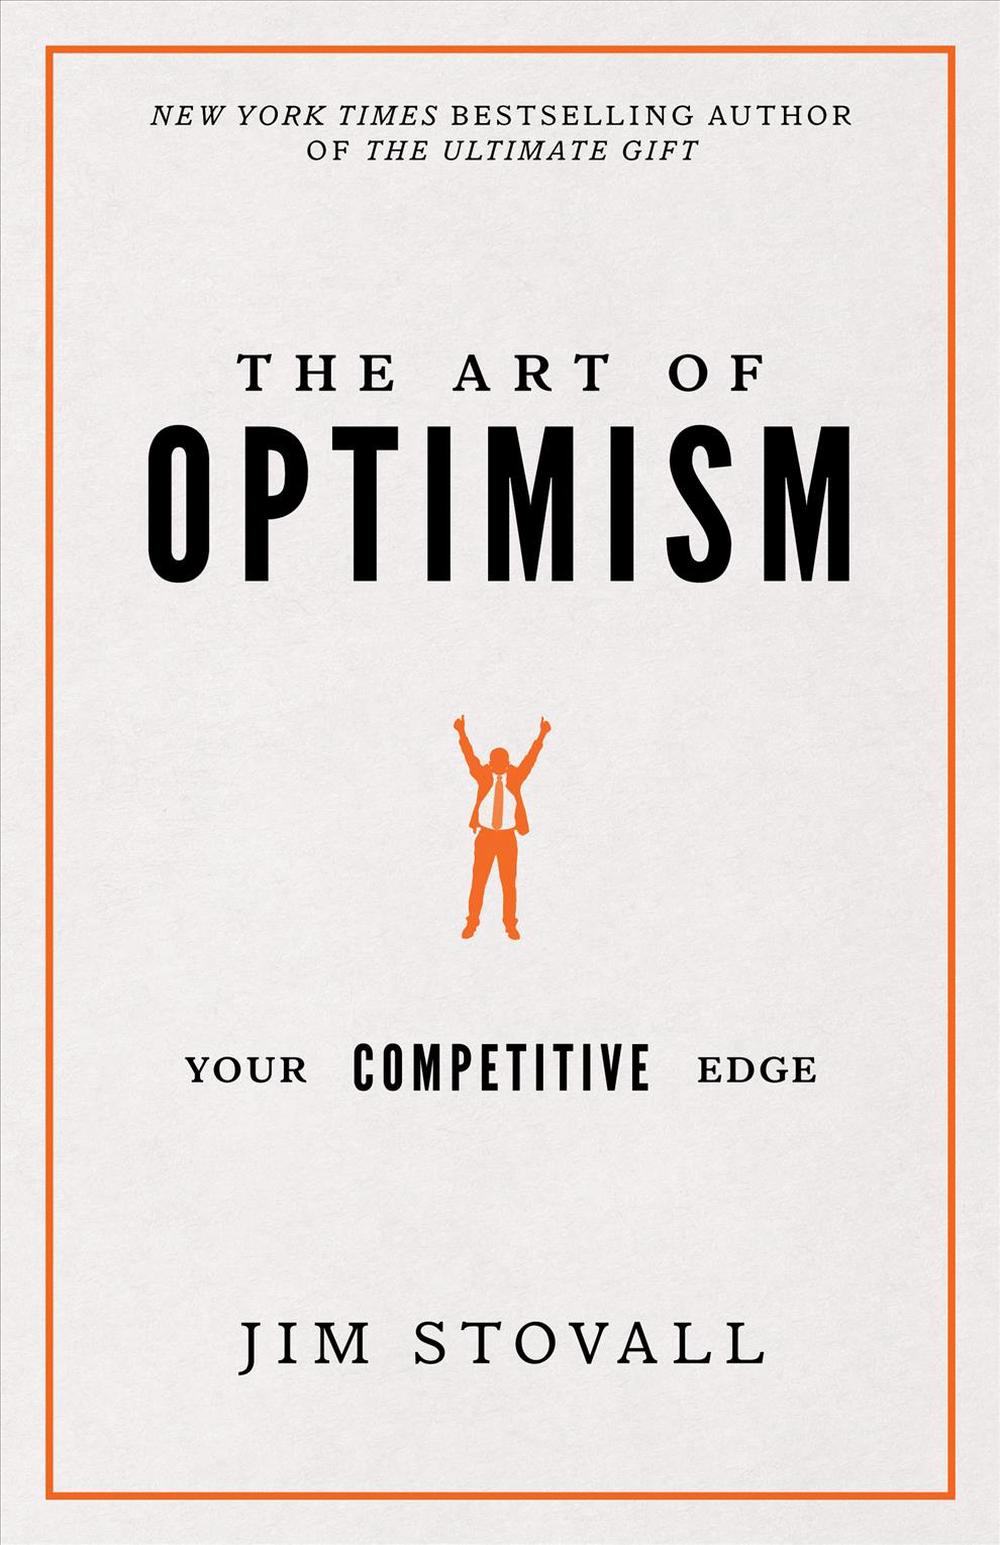 studies that use unrealistic optimism